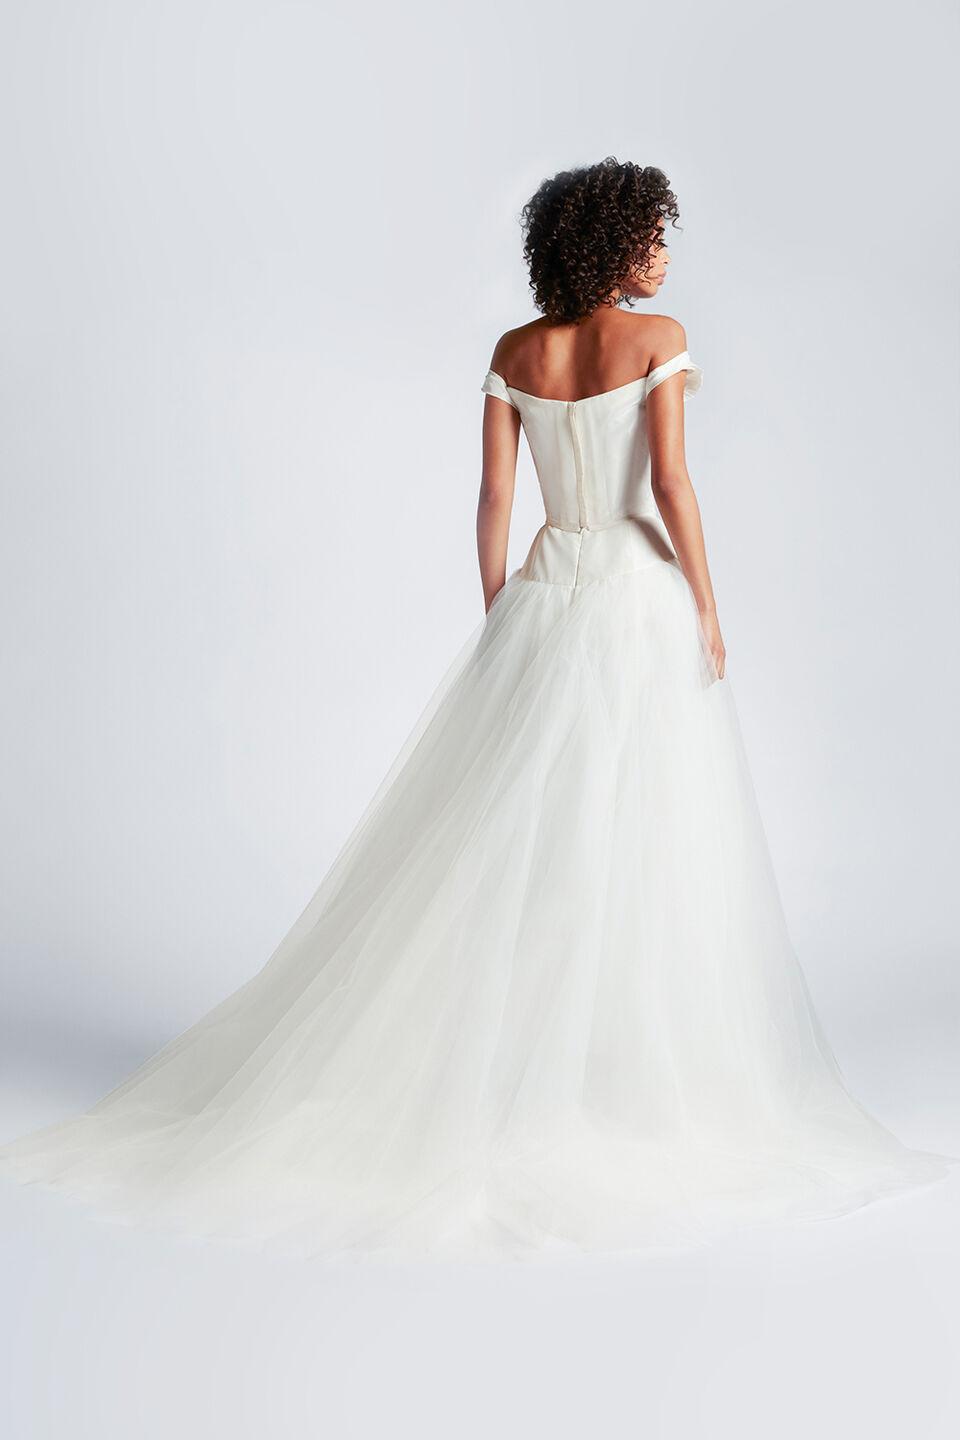 Bagatelle Corset & Vesta Petticoat Bridal Dress